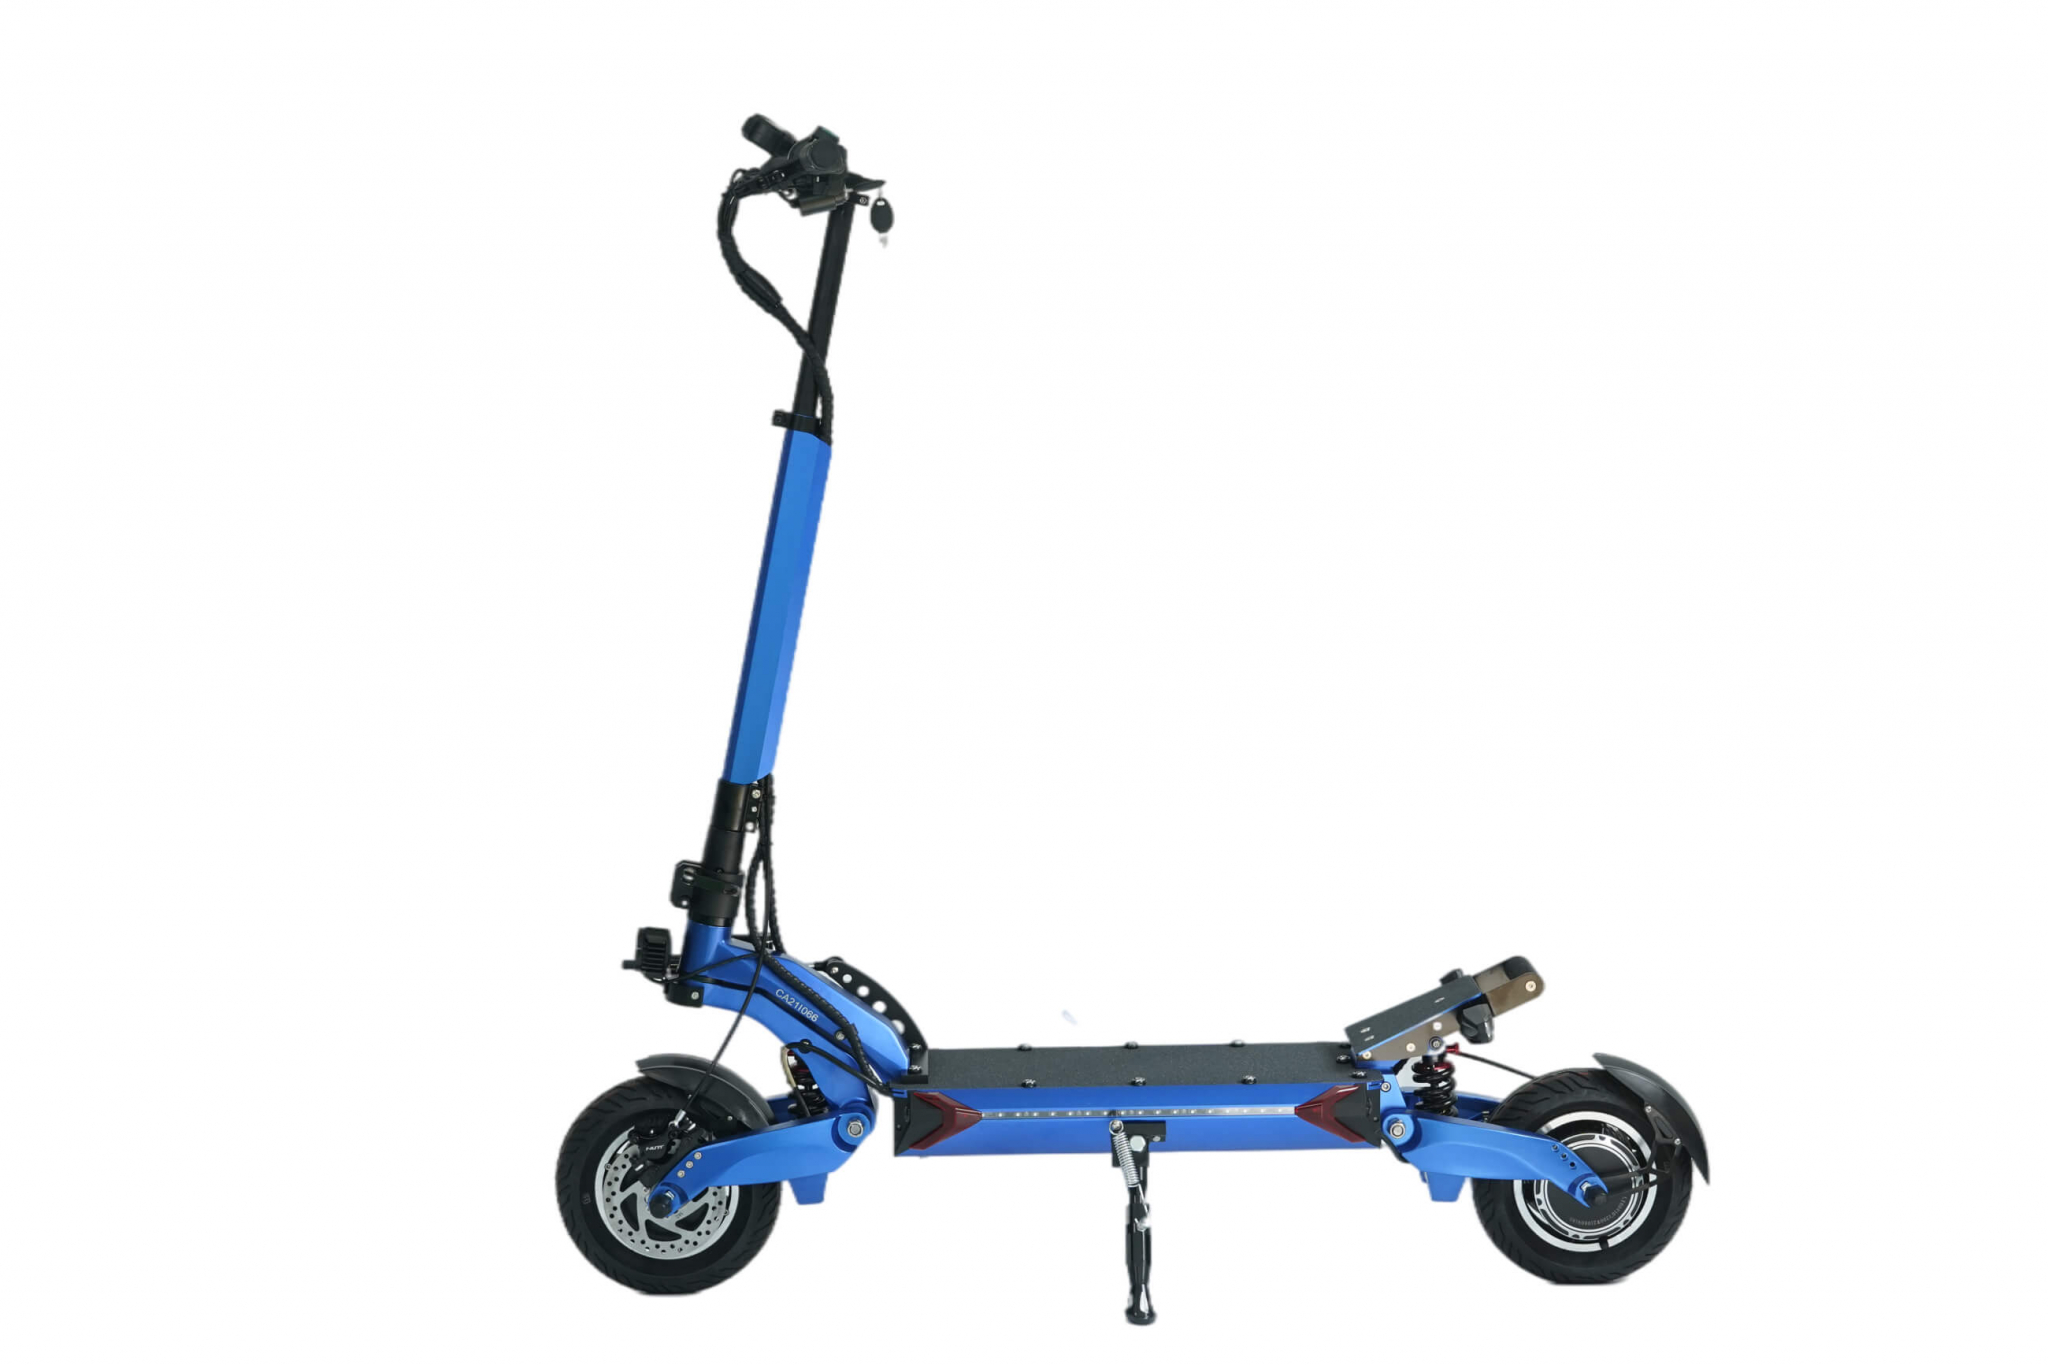 blade limited 10 inch 60V electric scooter blue color side